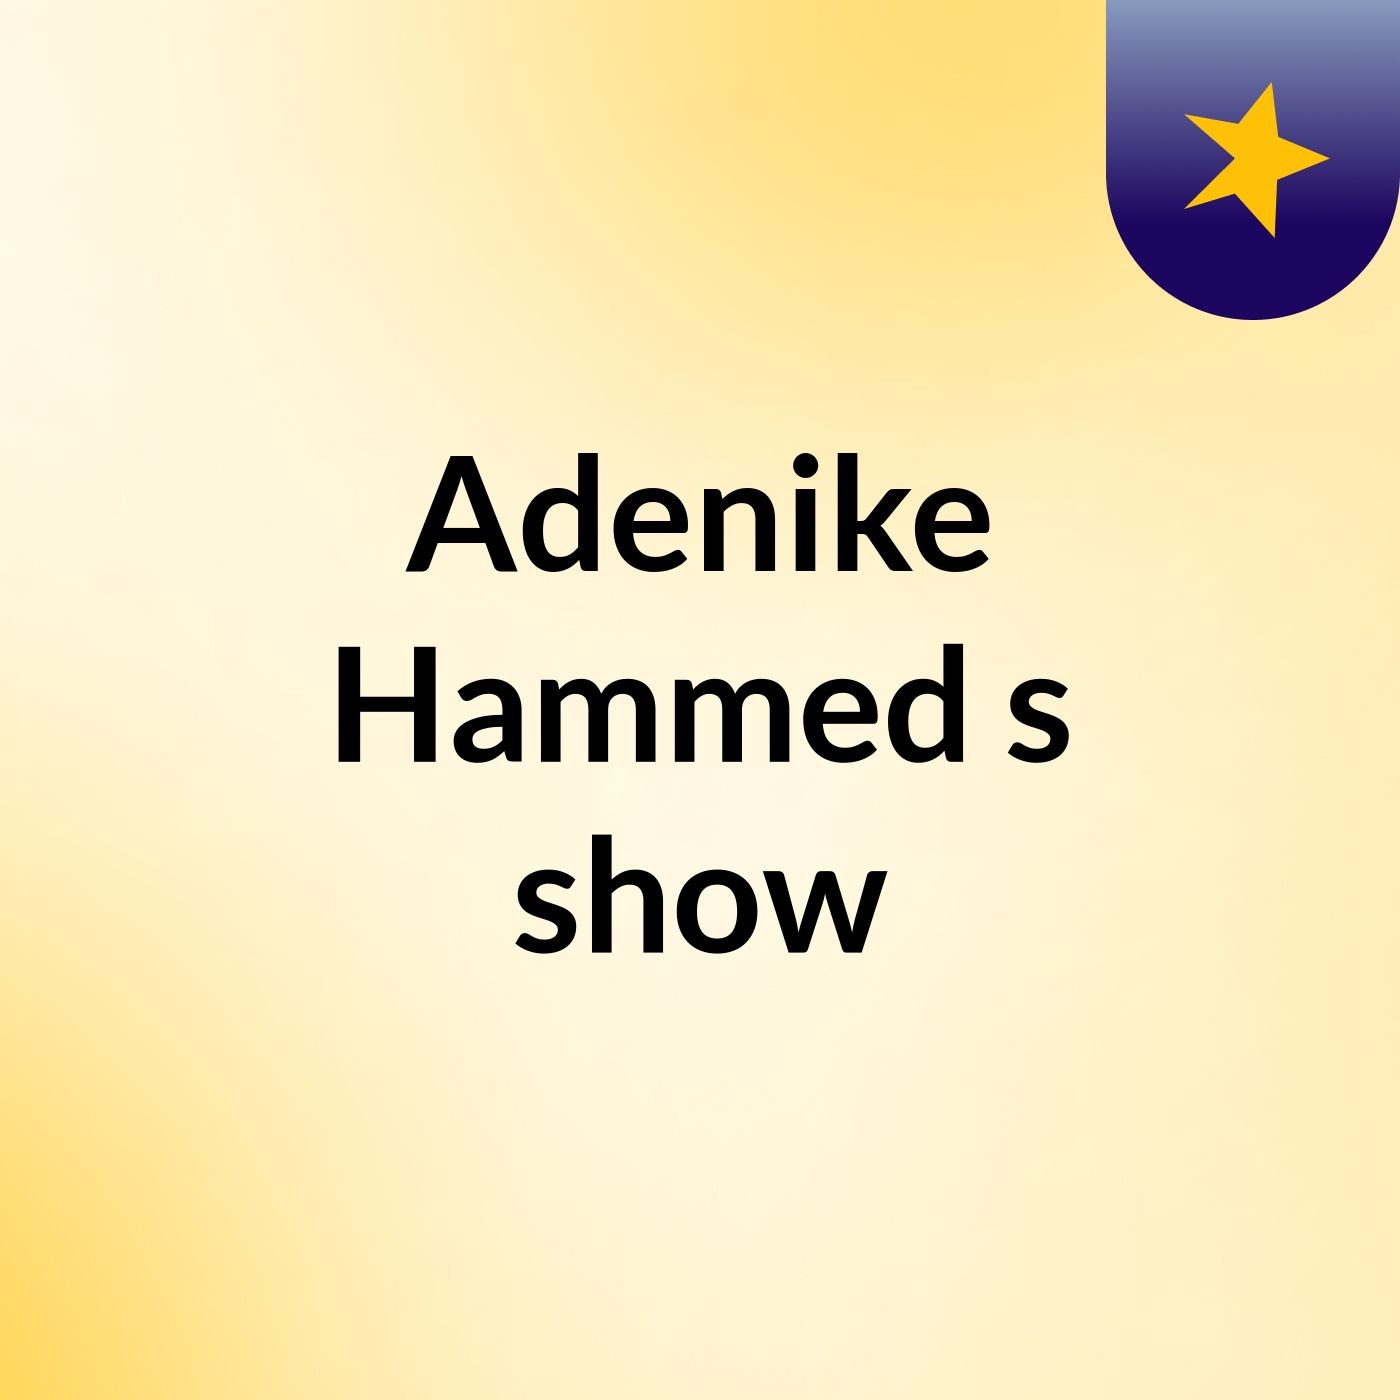 Adenike Hammed's show